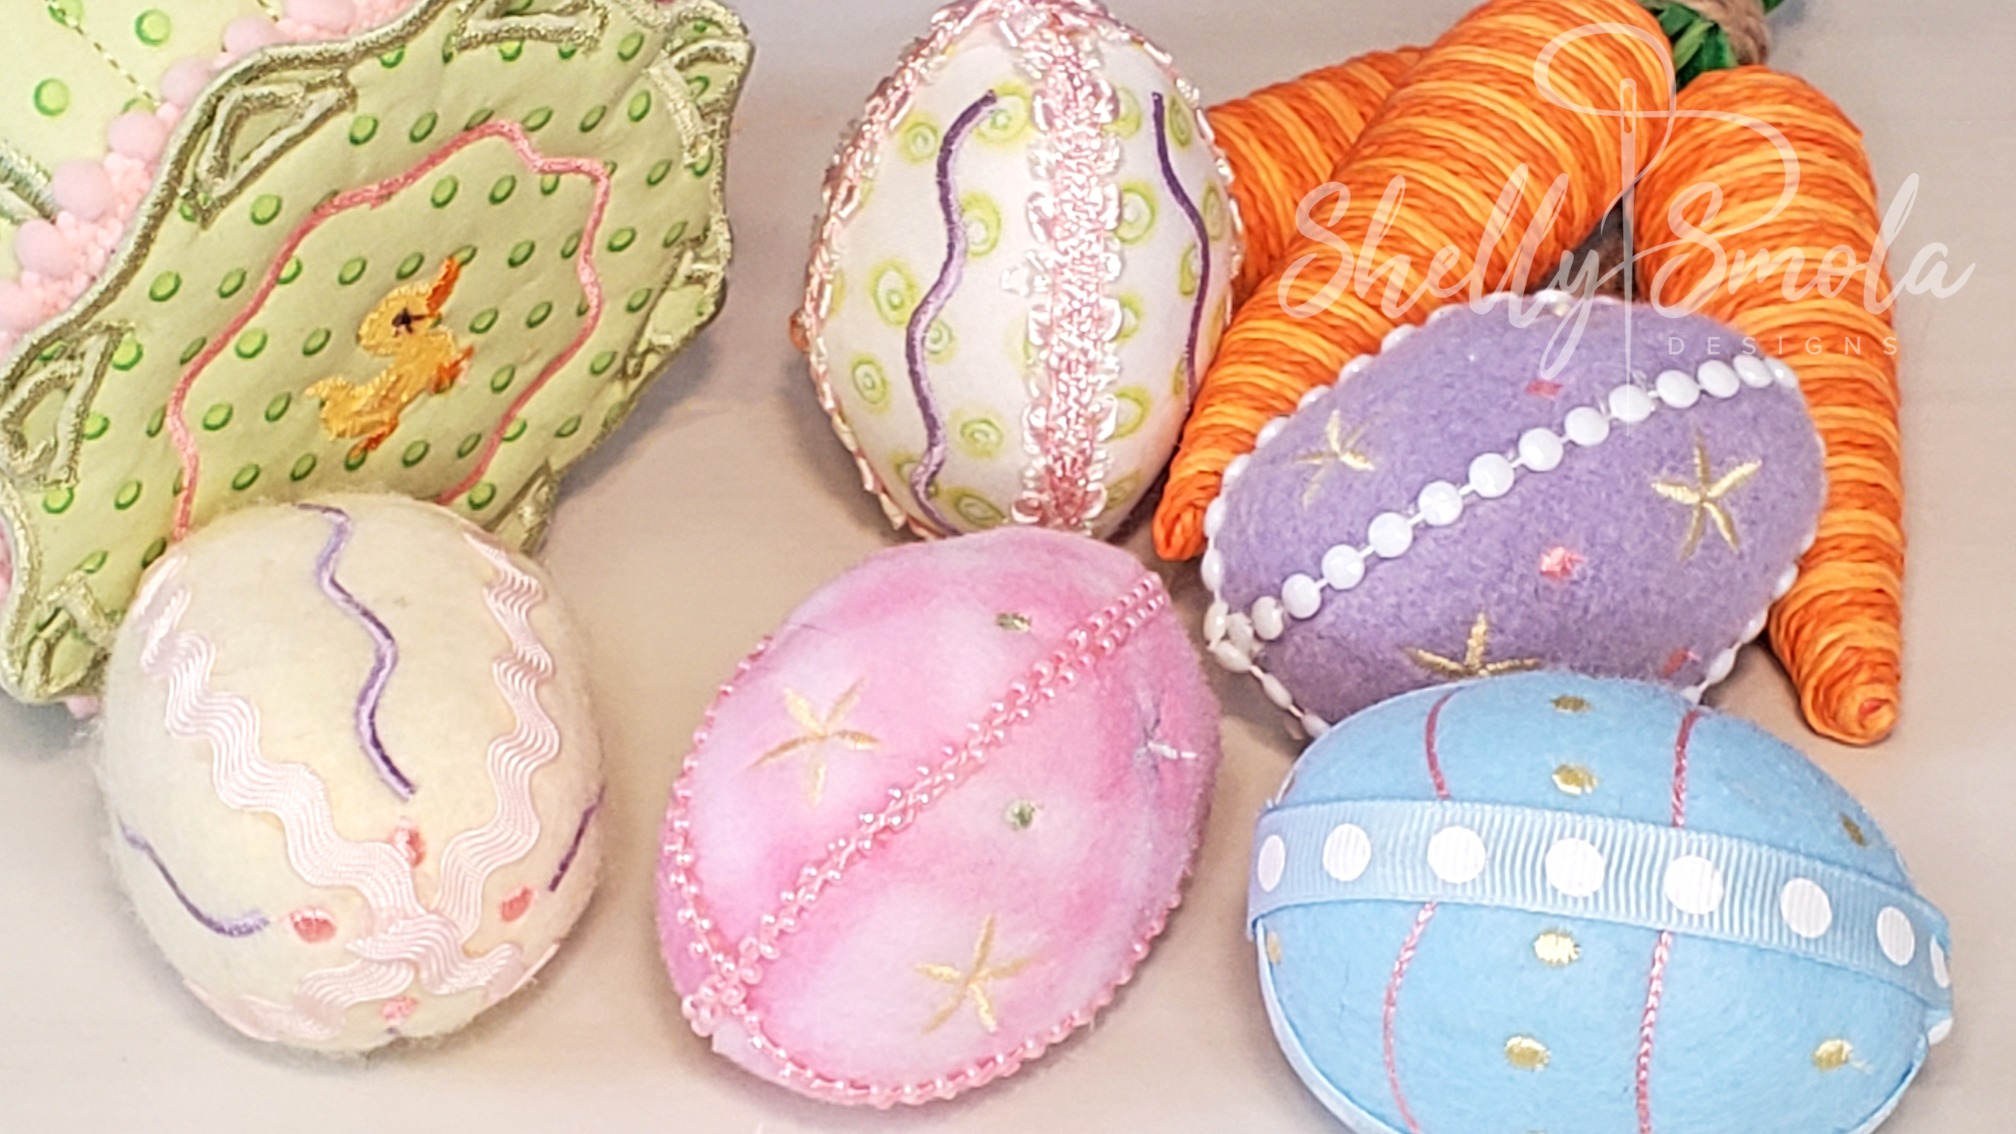 Bunny Basket Eggs by Shelly Smola